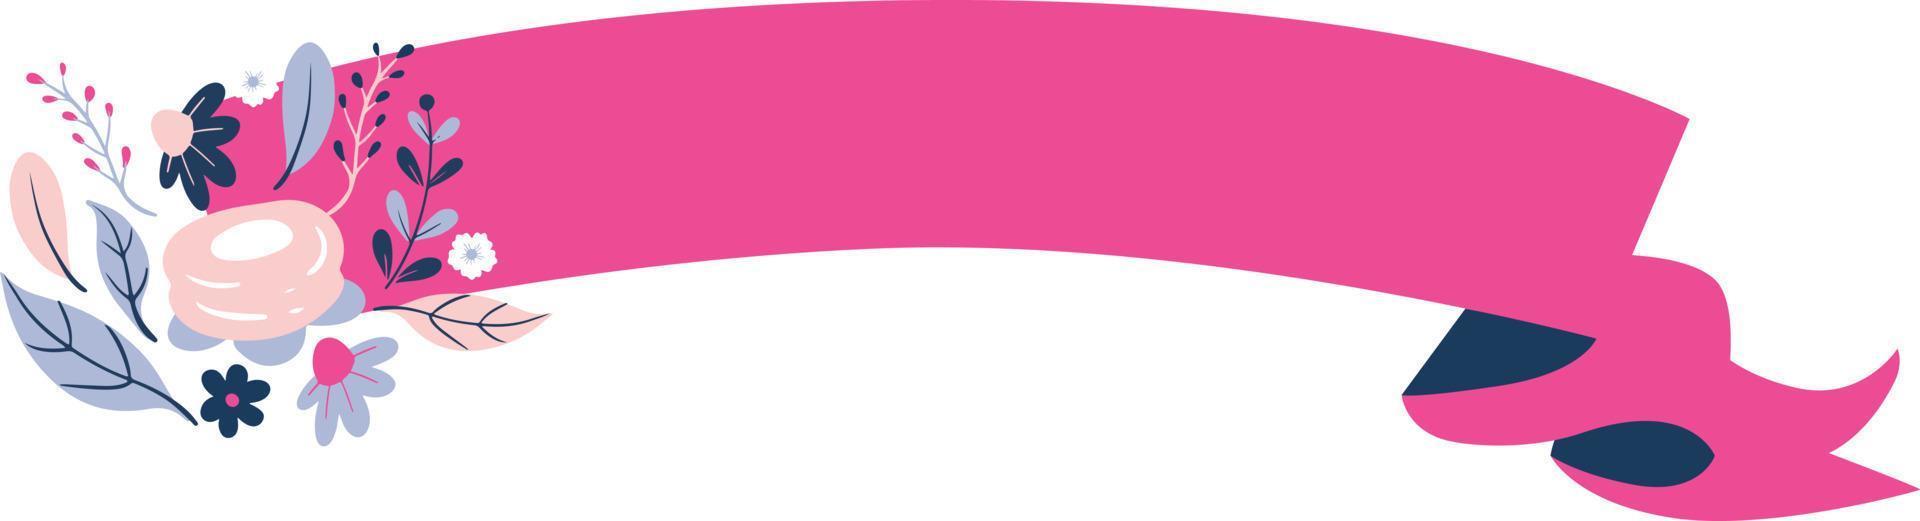 Pink floral banner vector